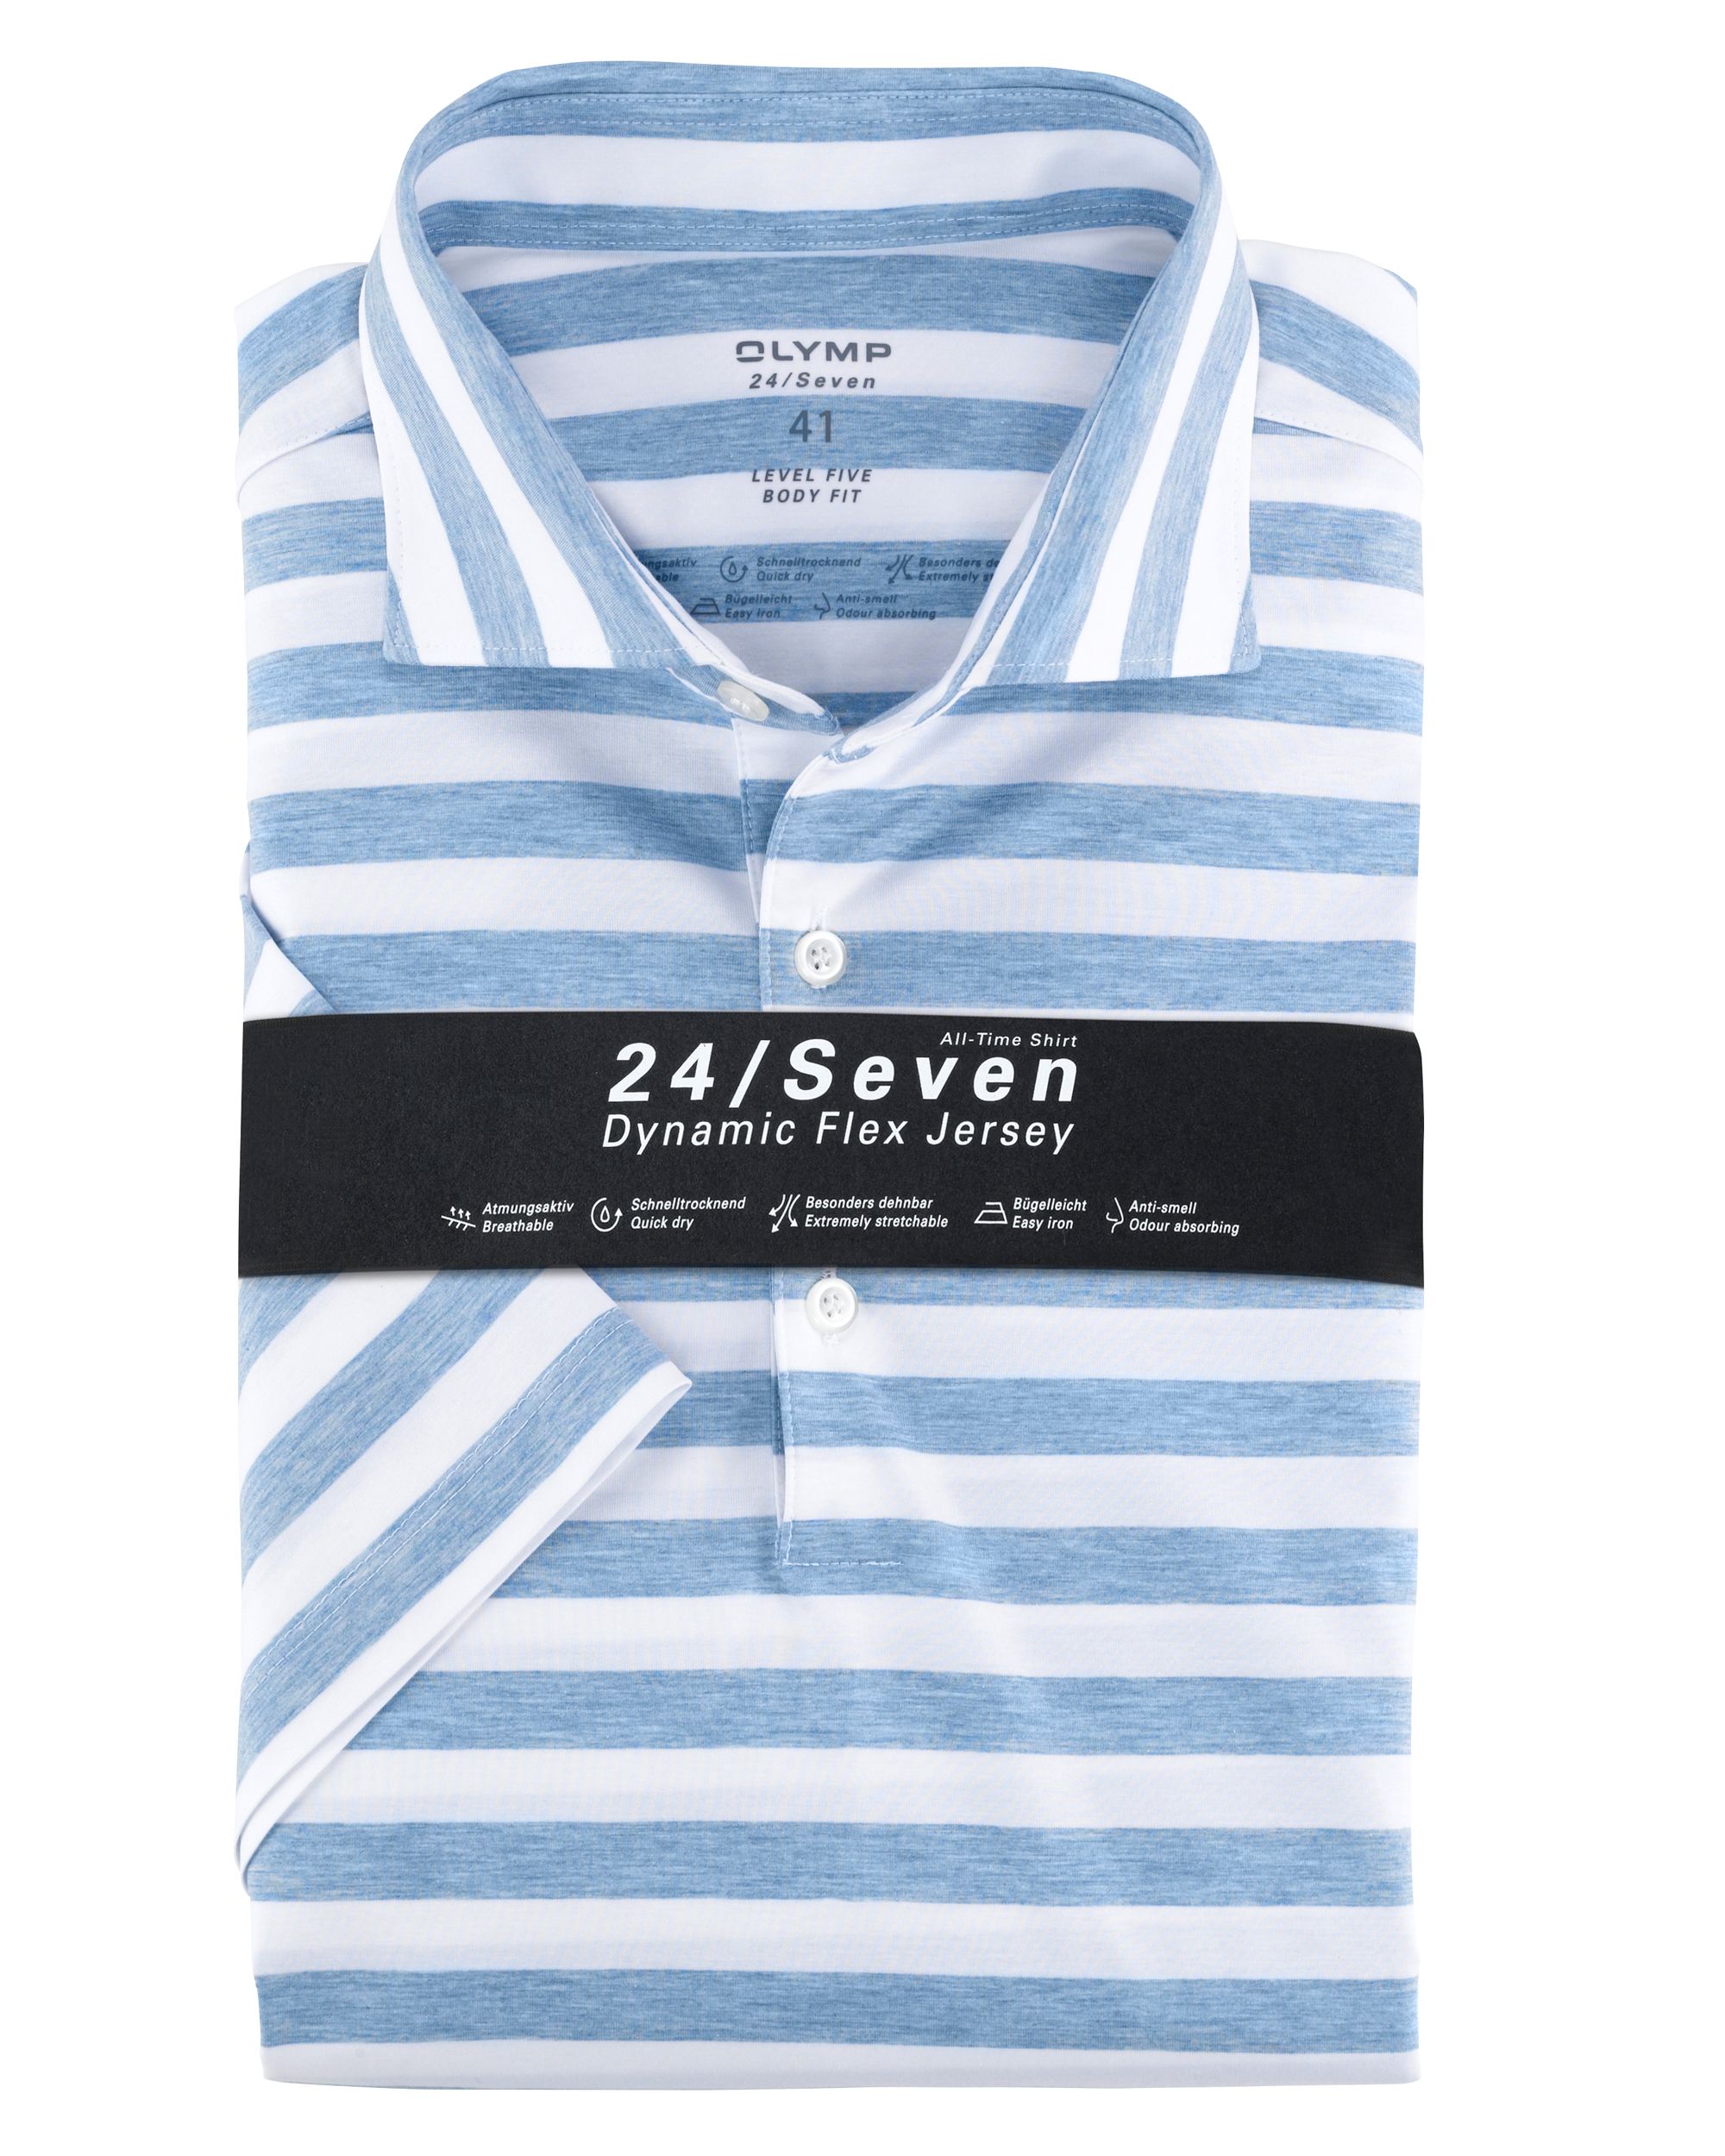 OLYMP 24/Seven Level Overhemd KM Blauw 075698-001-37